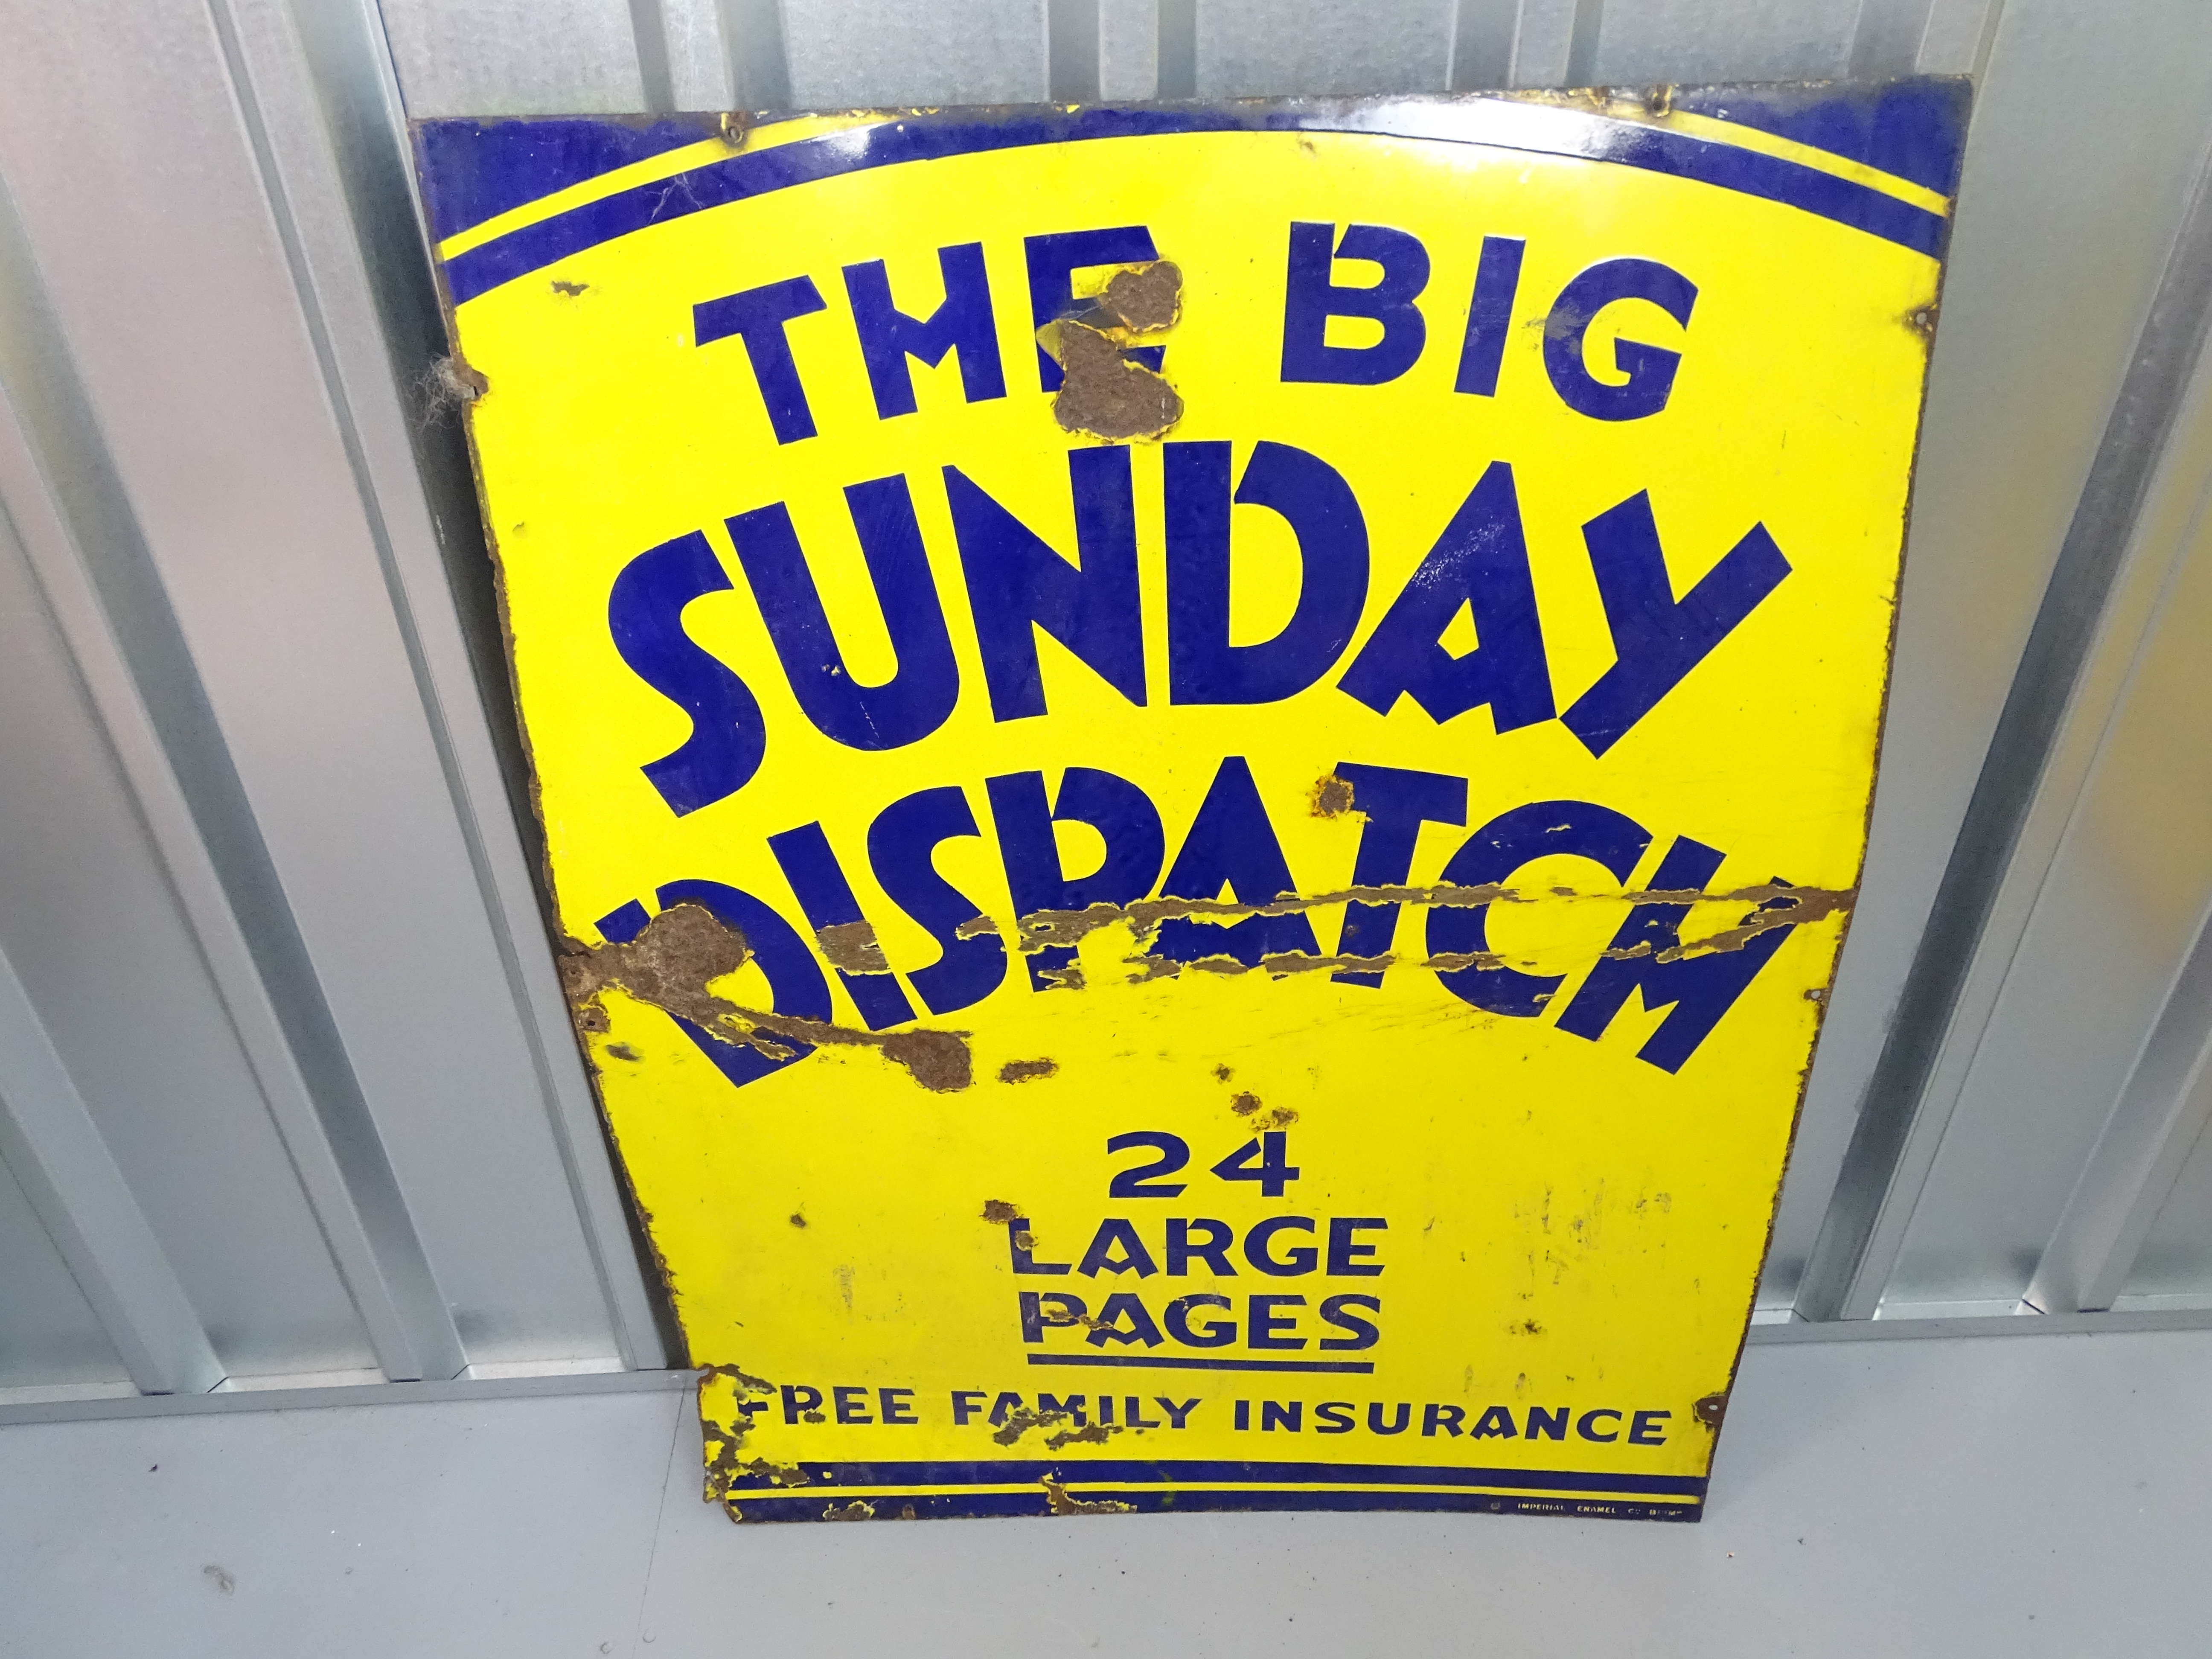 SUNDAY DISPATCH (30" x 40")- enamel single sided advertising sign